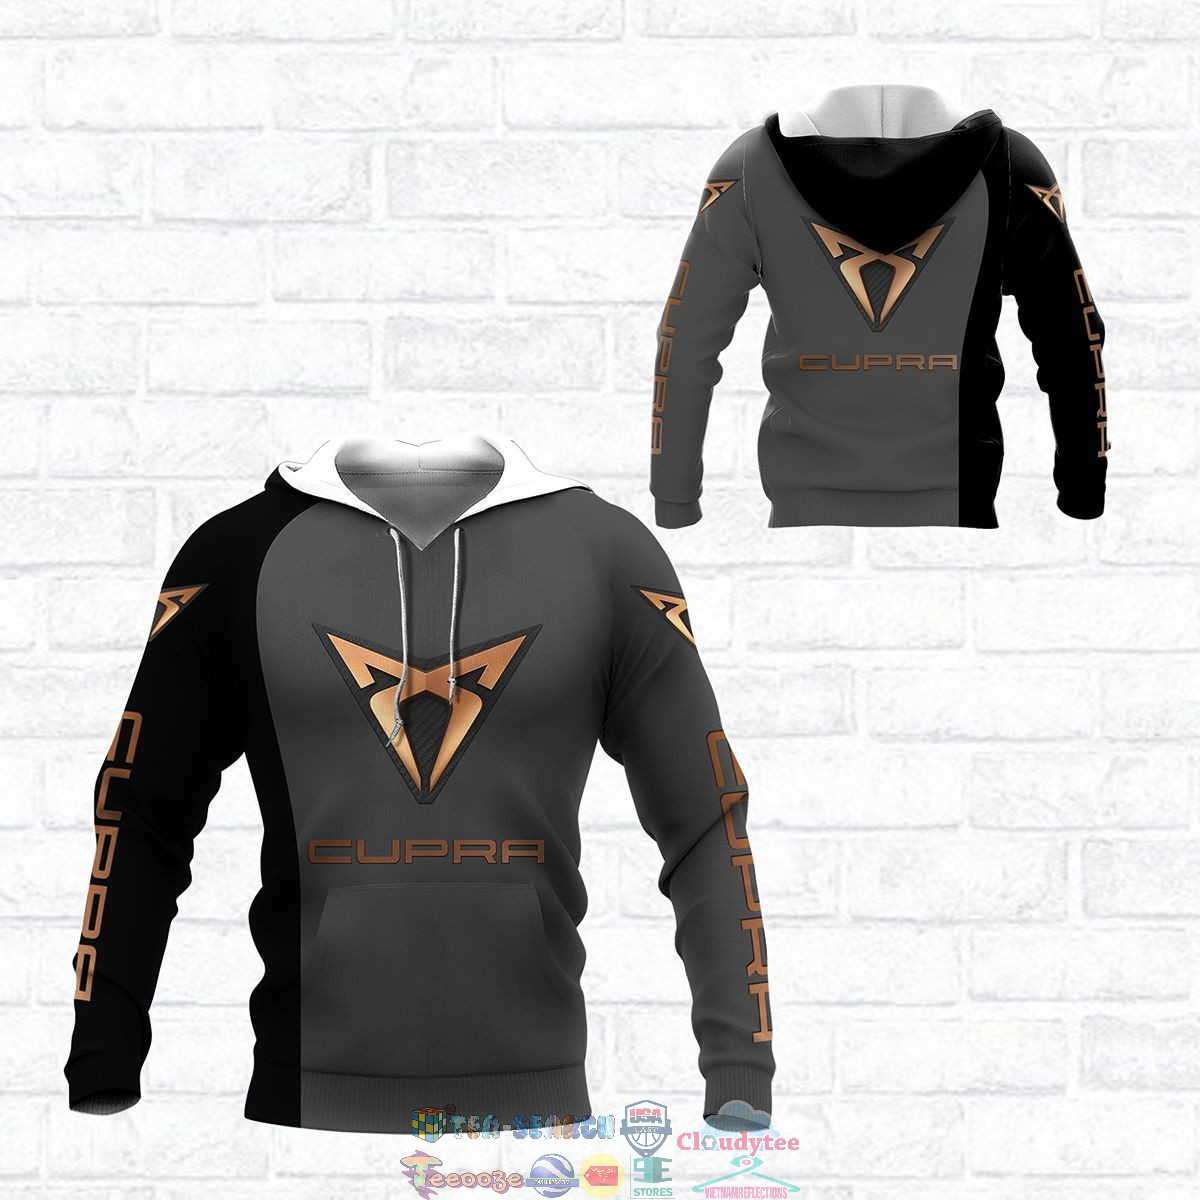 Cupra ver 5 3D hoodie and t-shirt